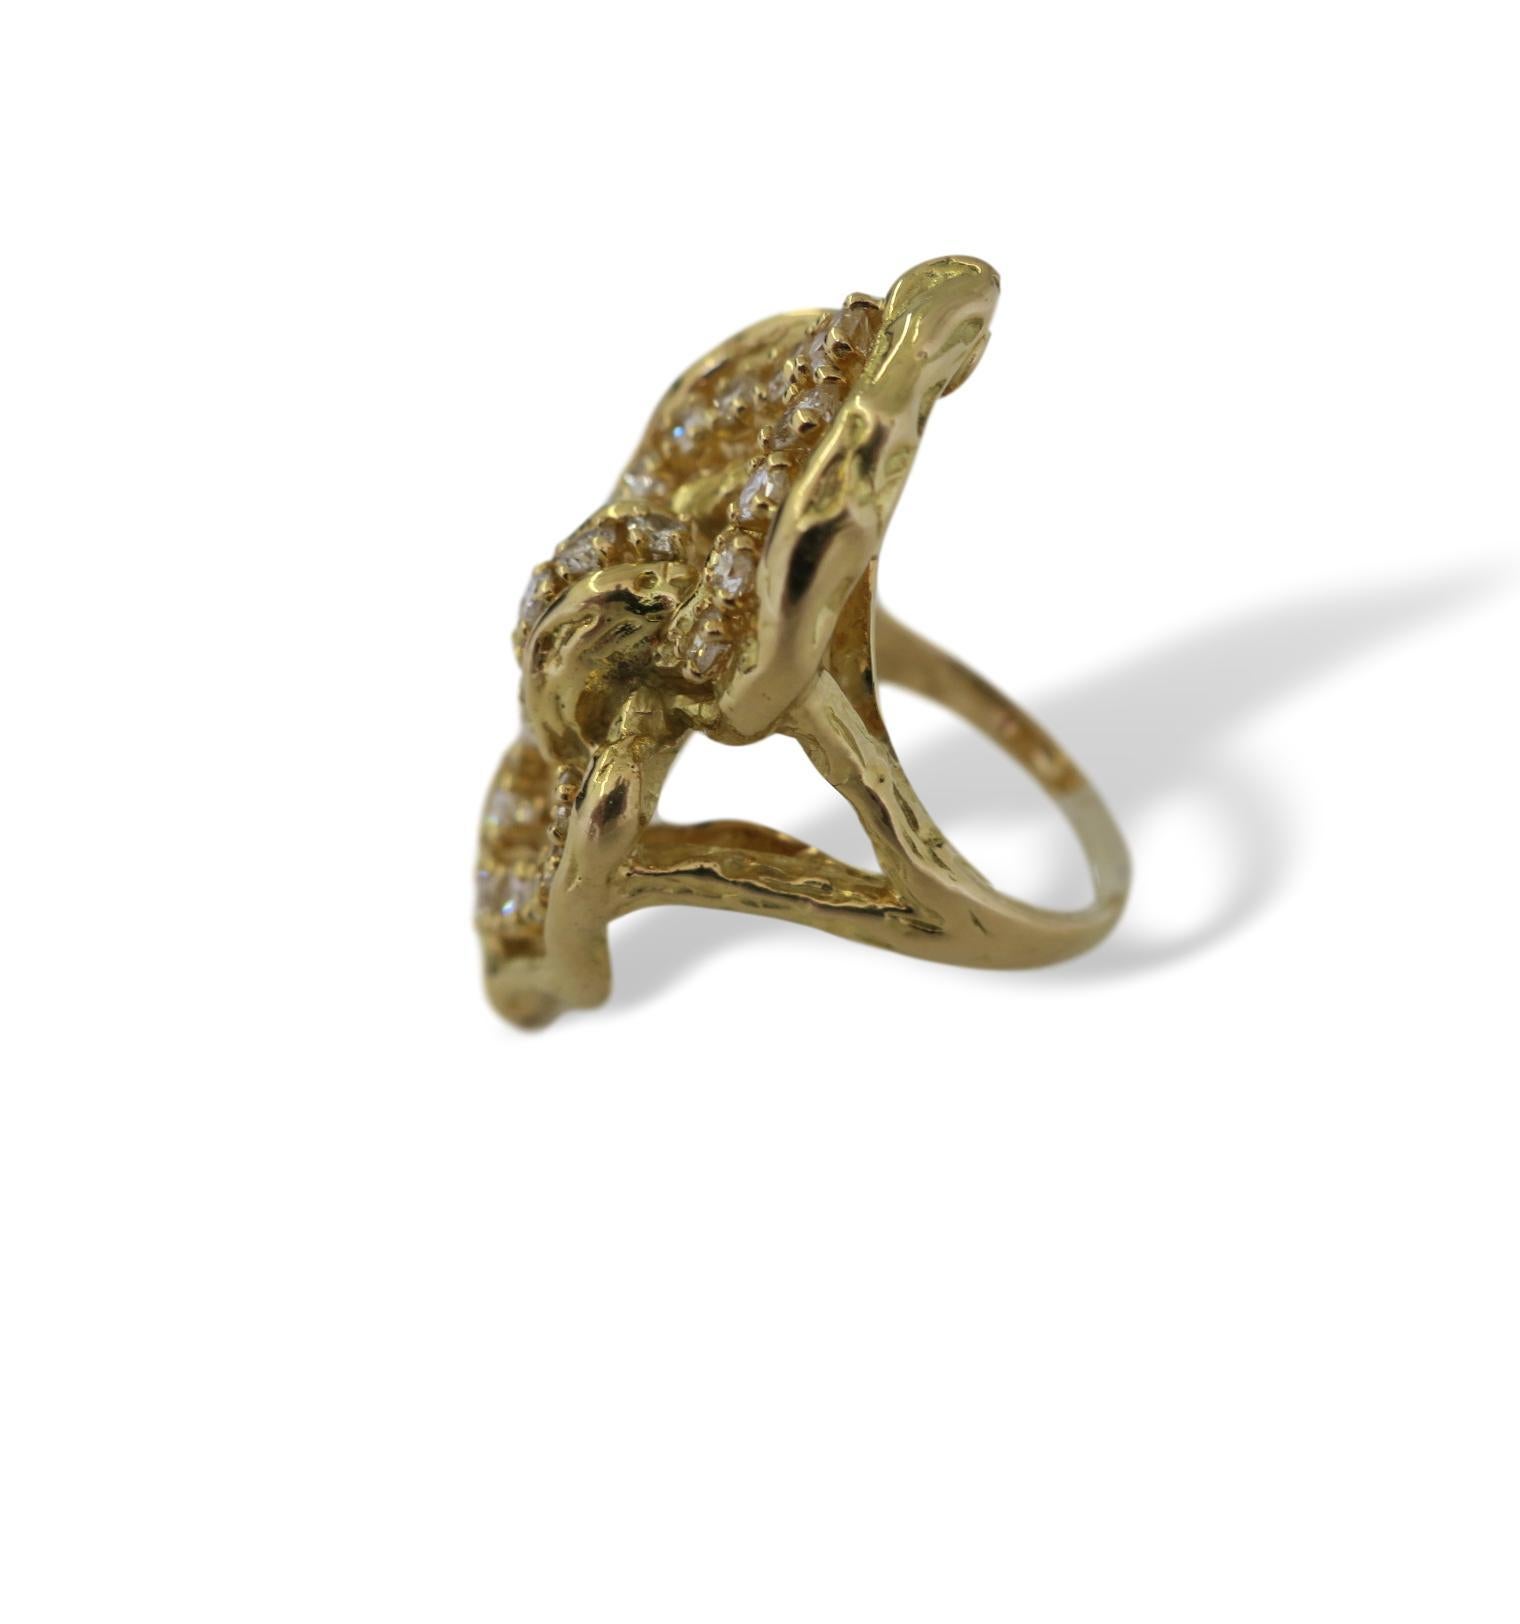 Modernist Vintage Chaumet Paris Diamond and Gold Statement Ring